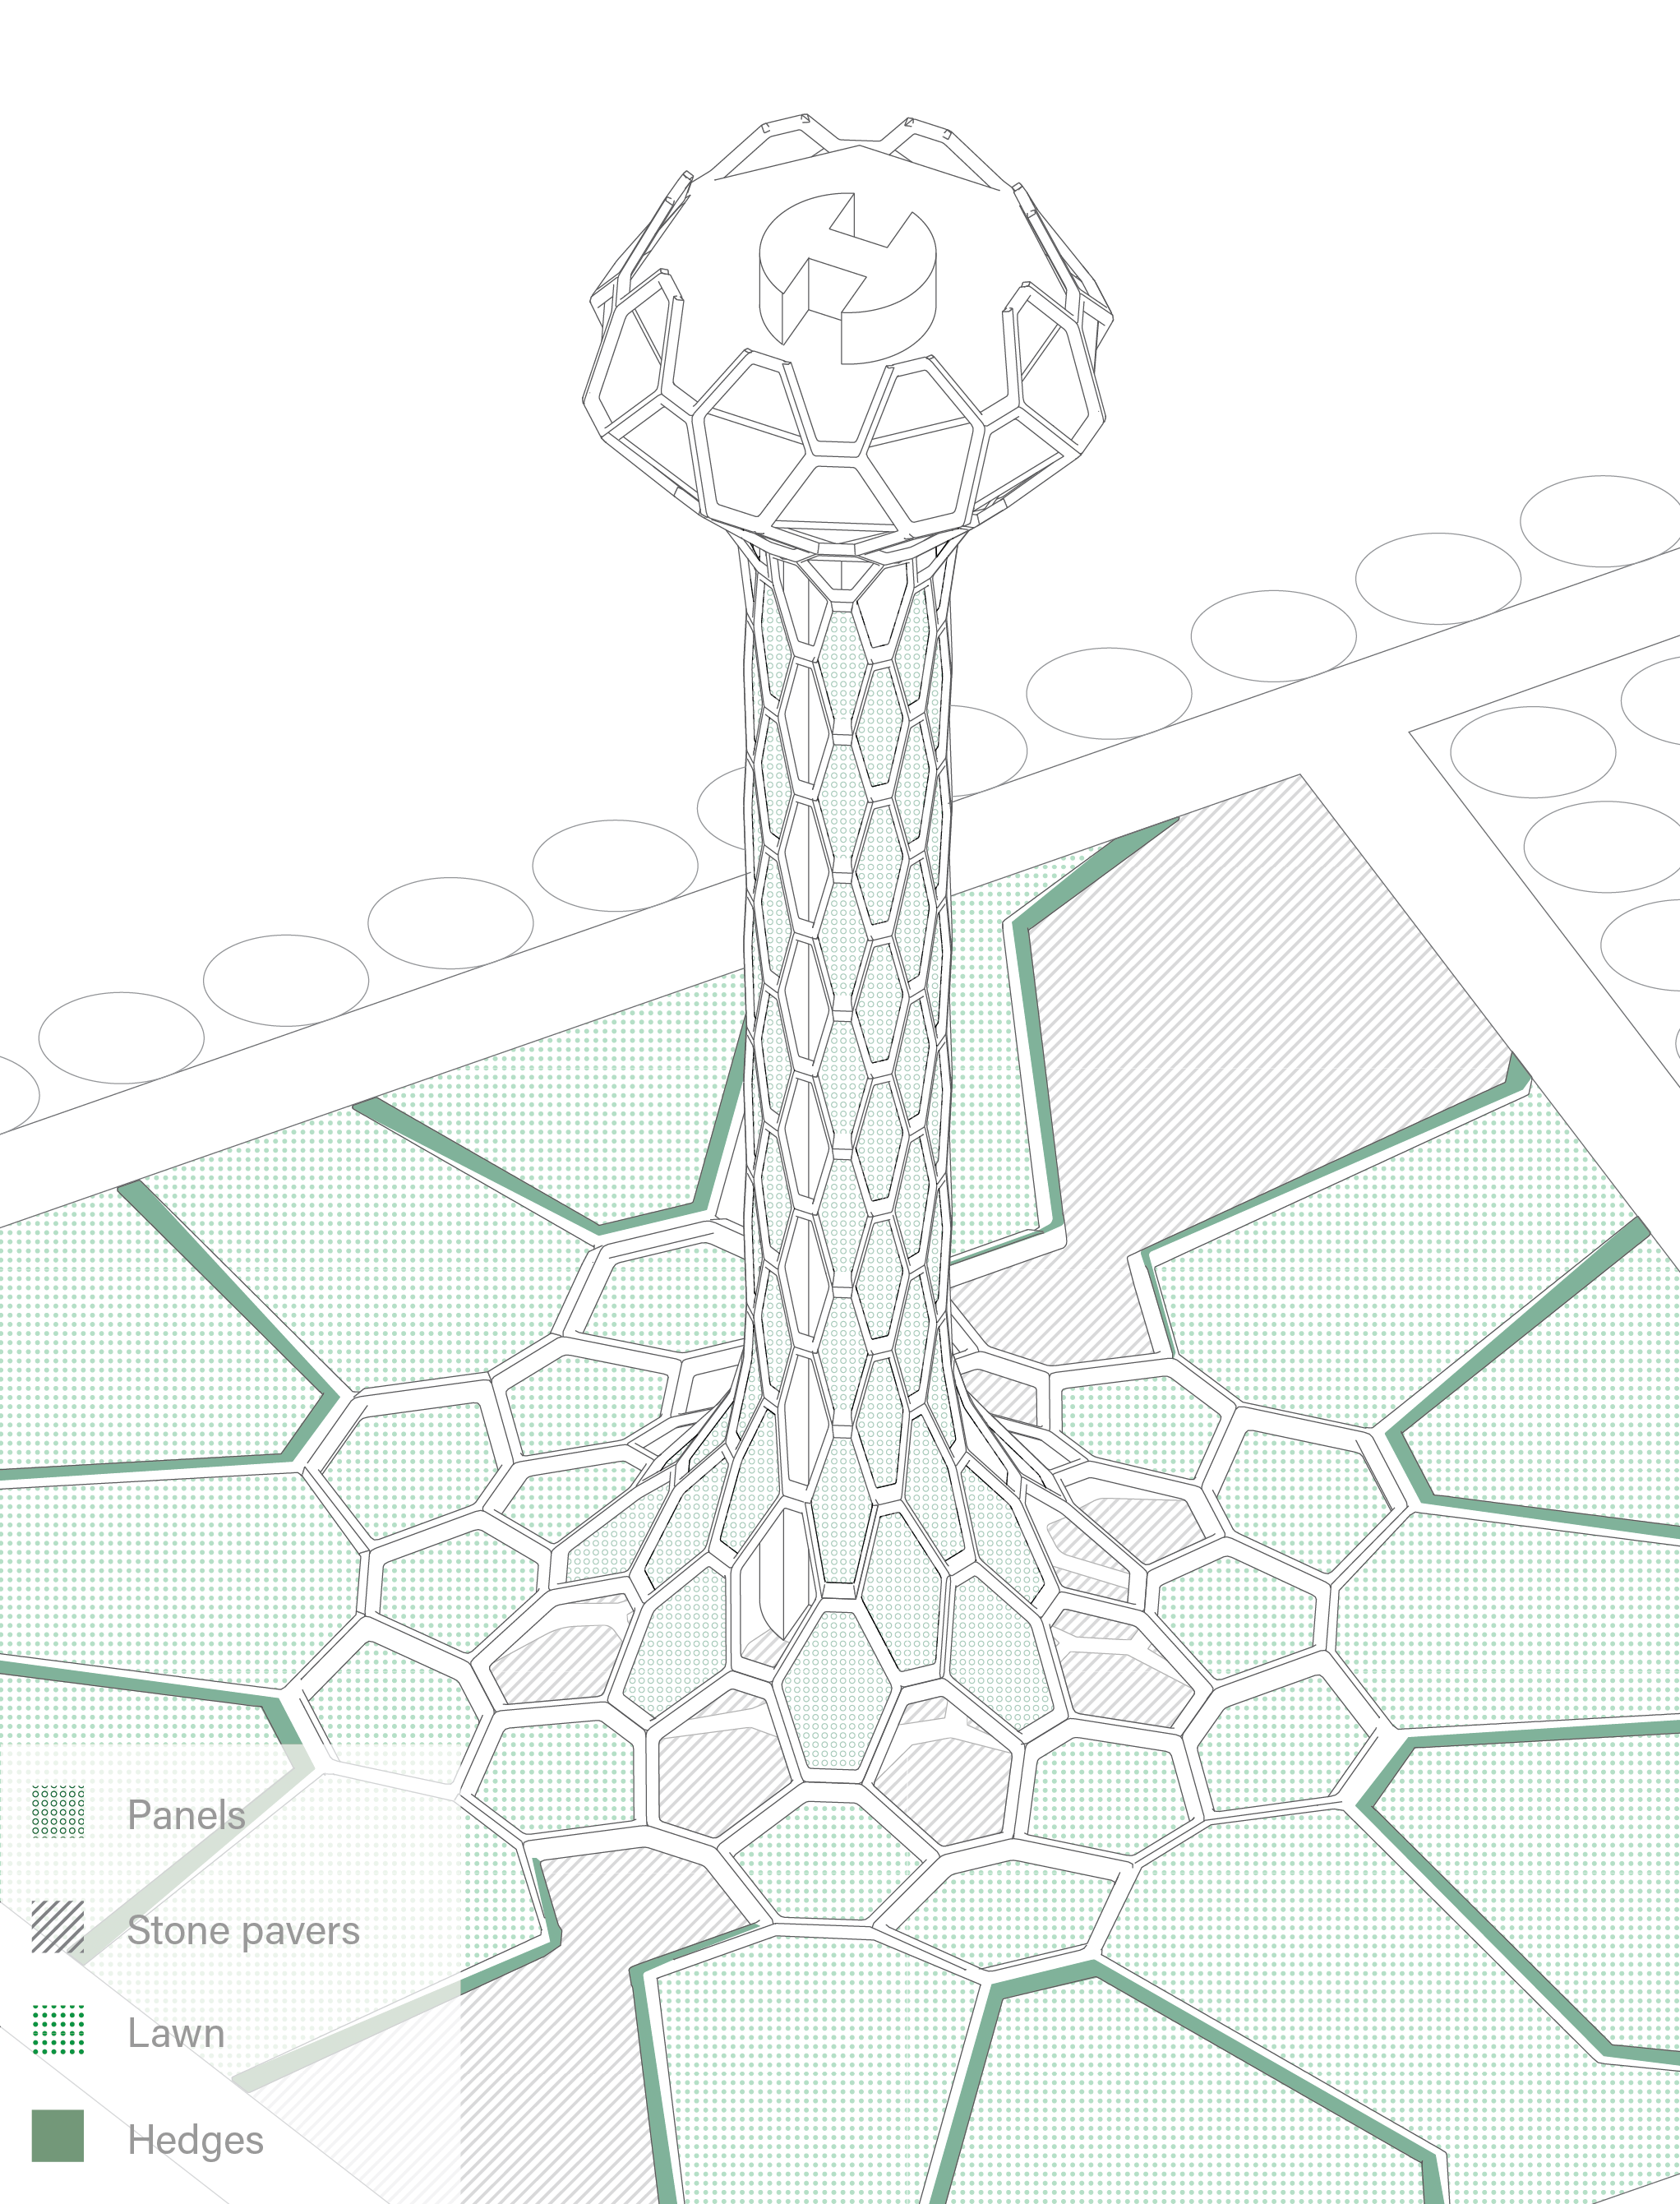 Revolving tower landscape proposal